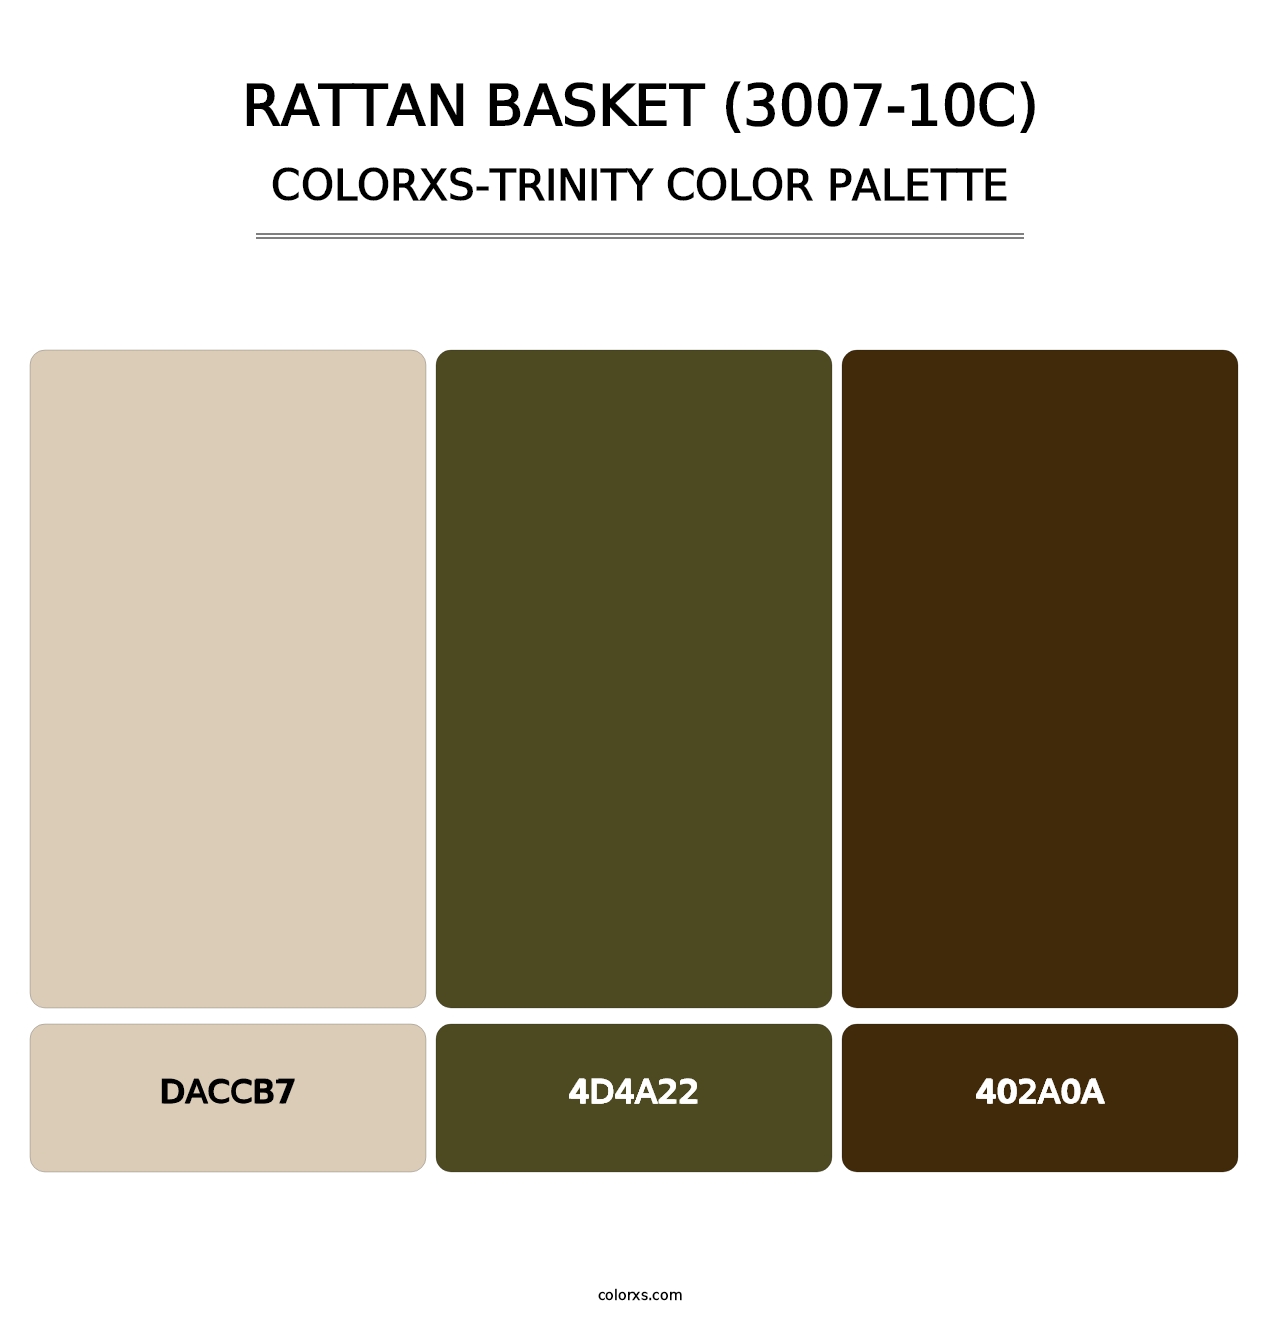 Rattan Basket (3007-10C) - Colorxs Trinity Palette